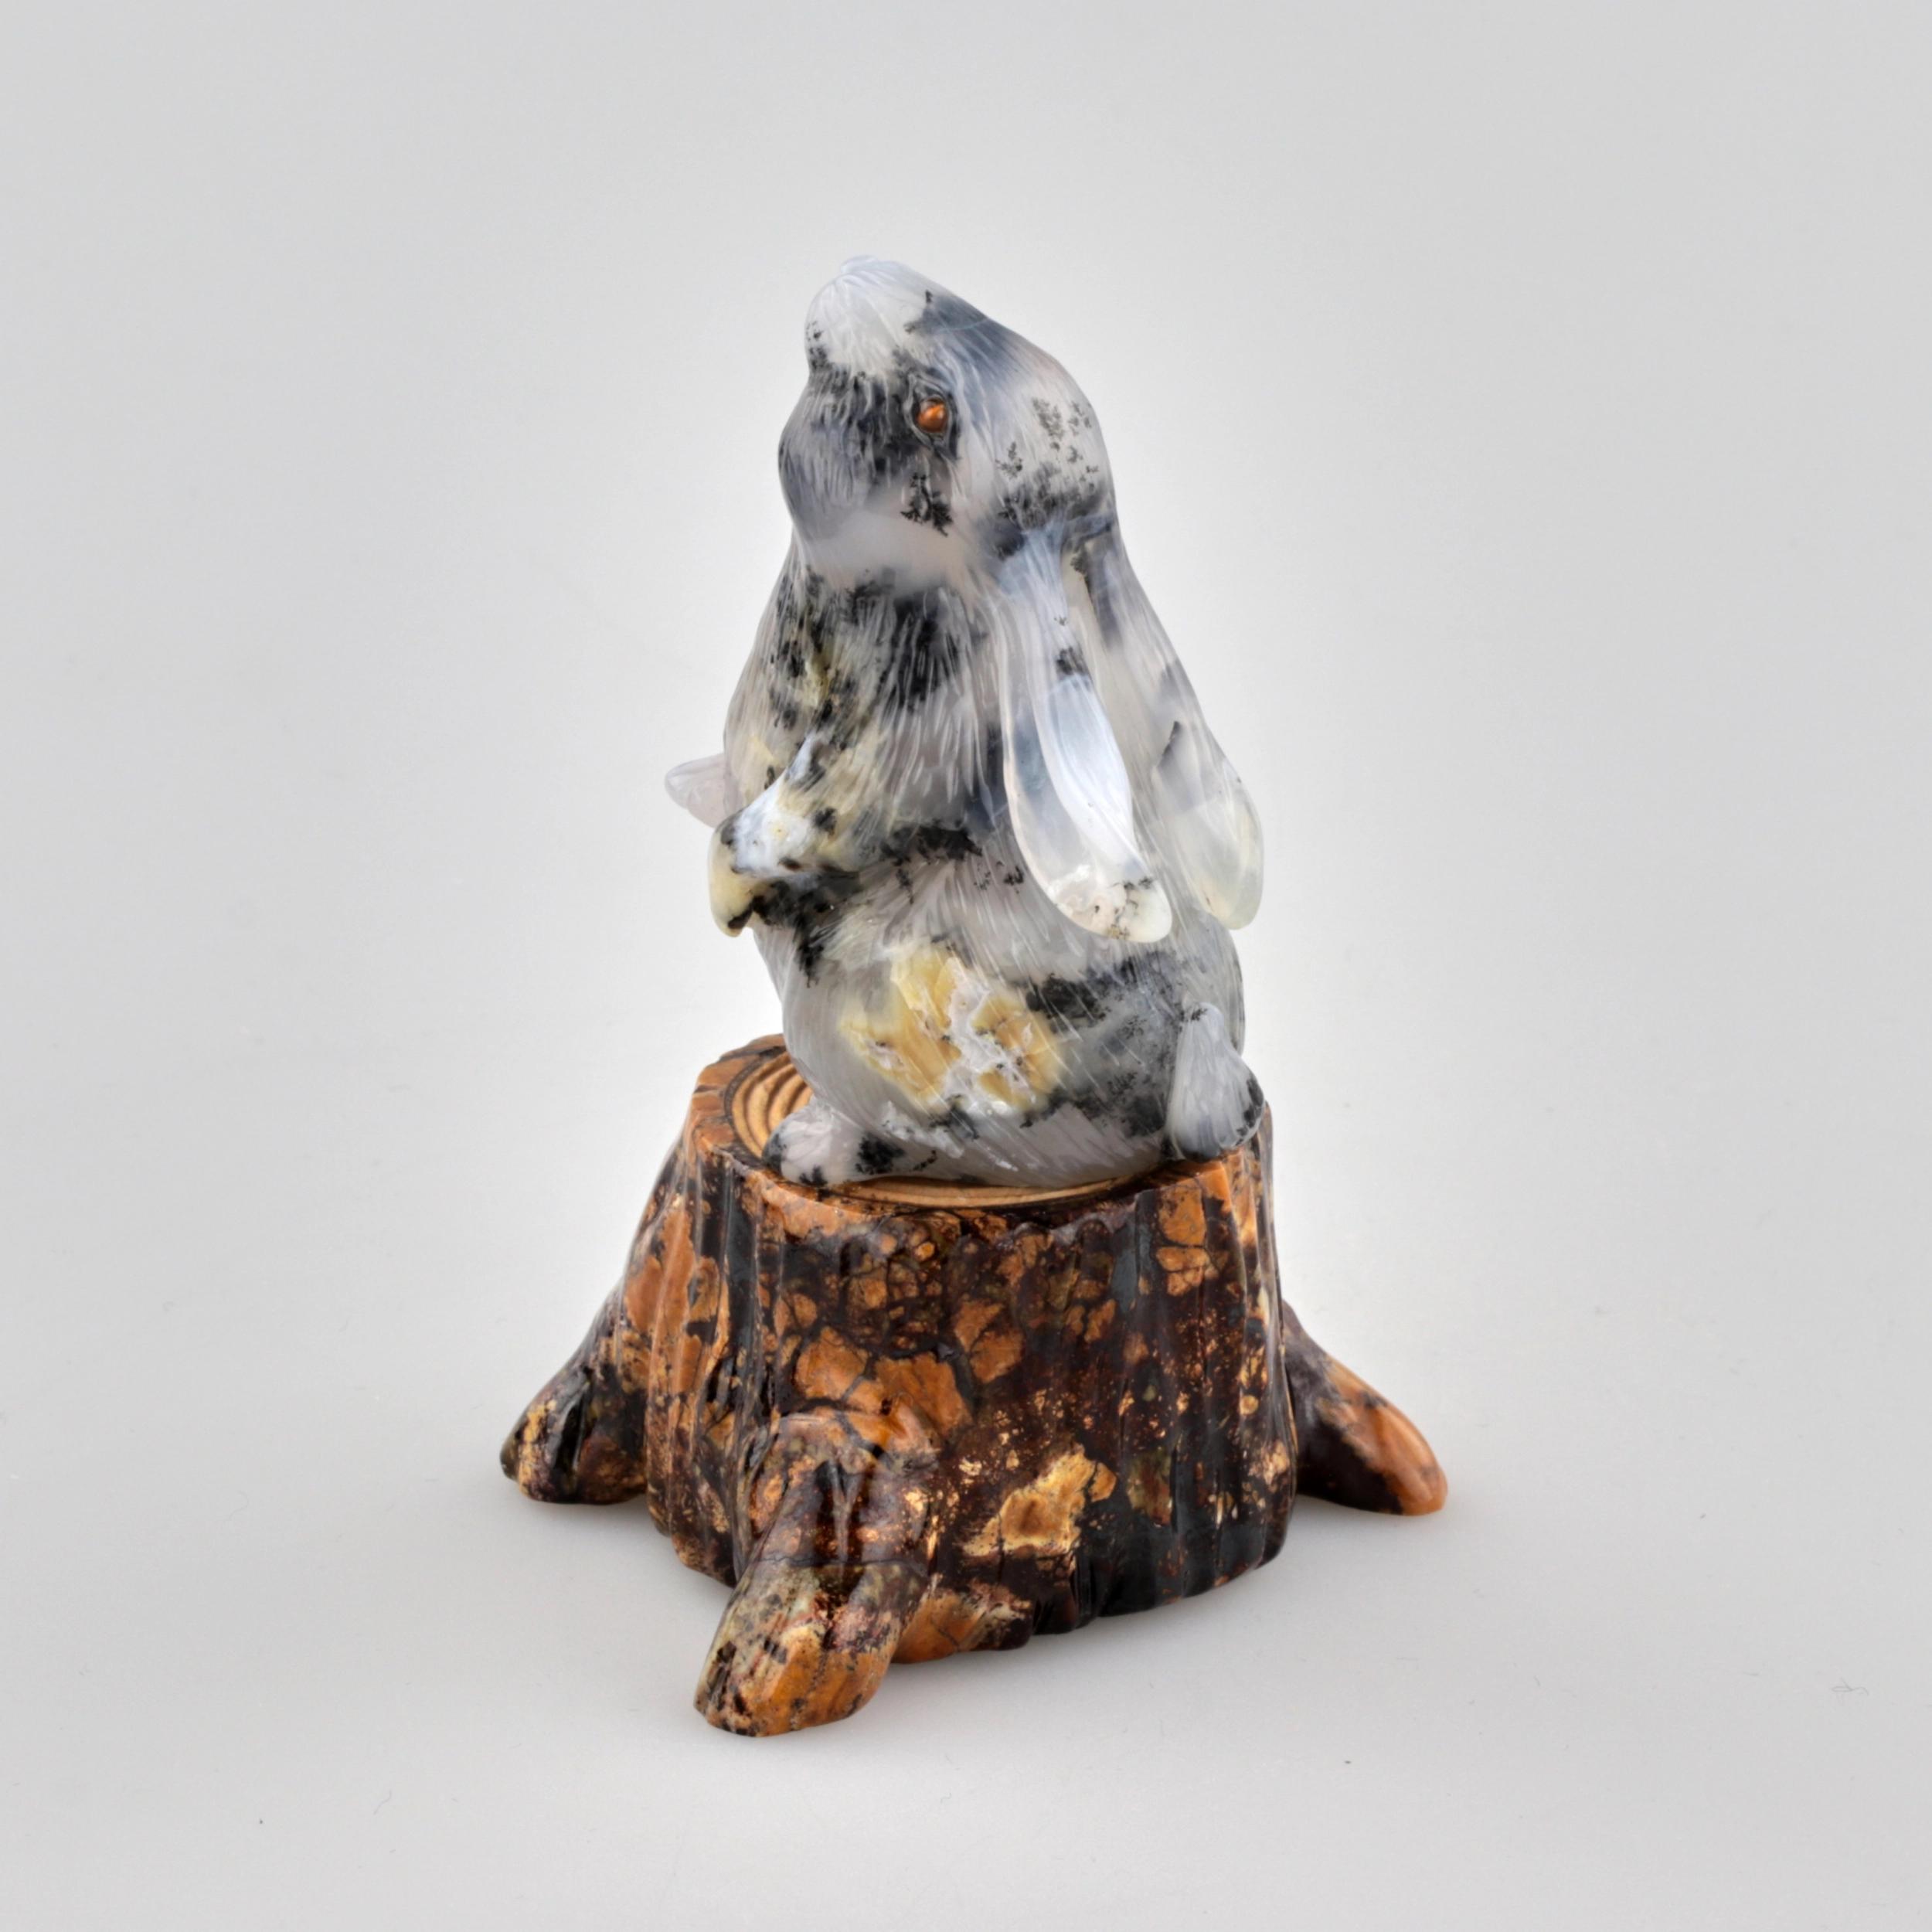 Figurine "Hare on a stump" - Image 3 of 6